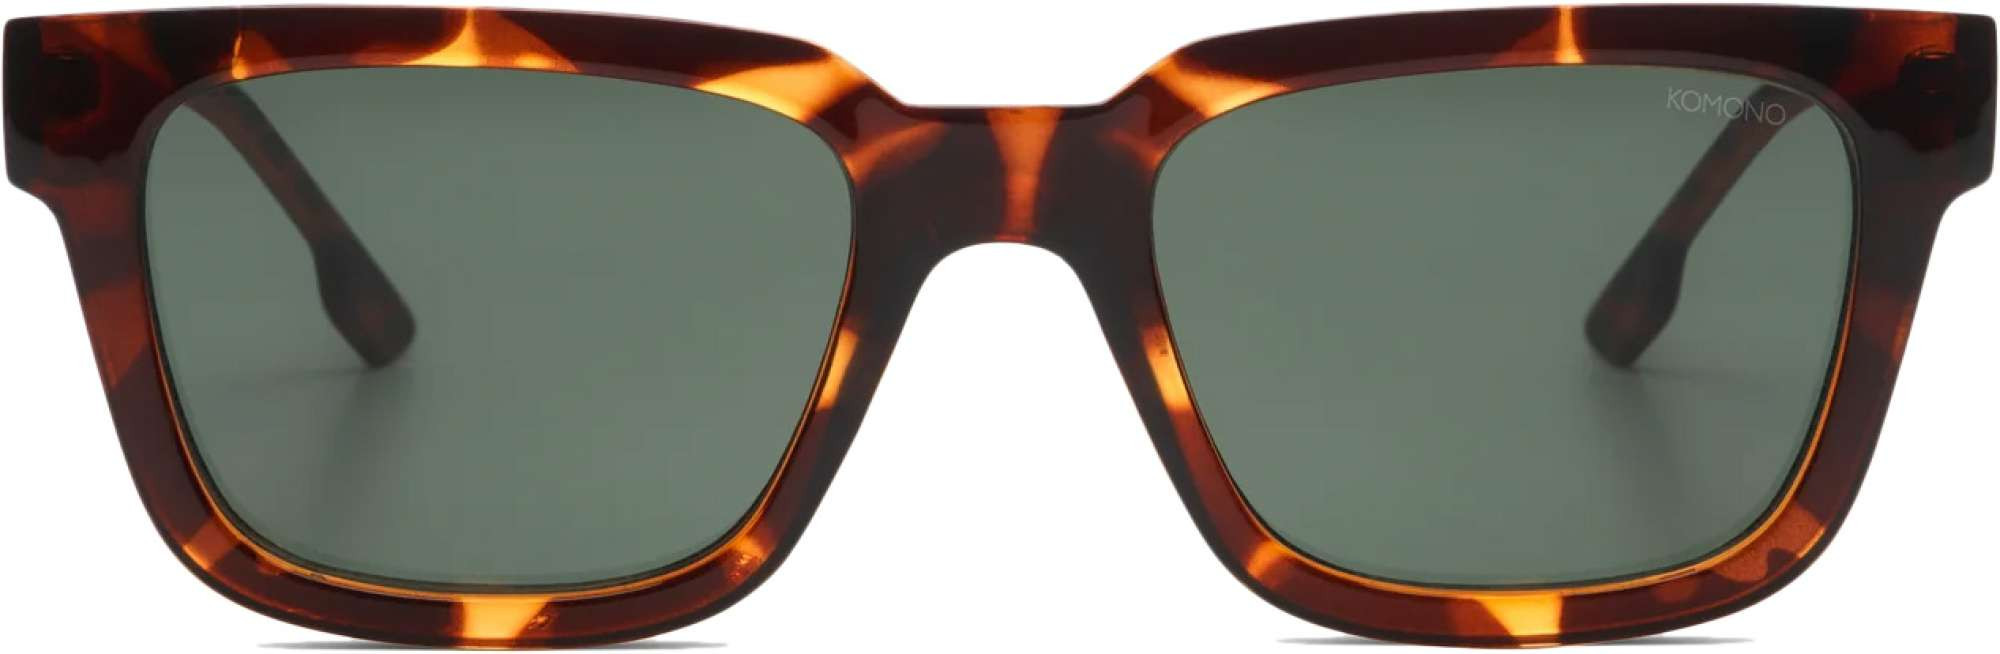 Afbeelding van Komono Bobby havana sunglasses